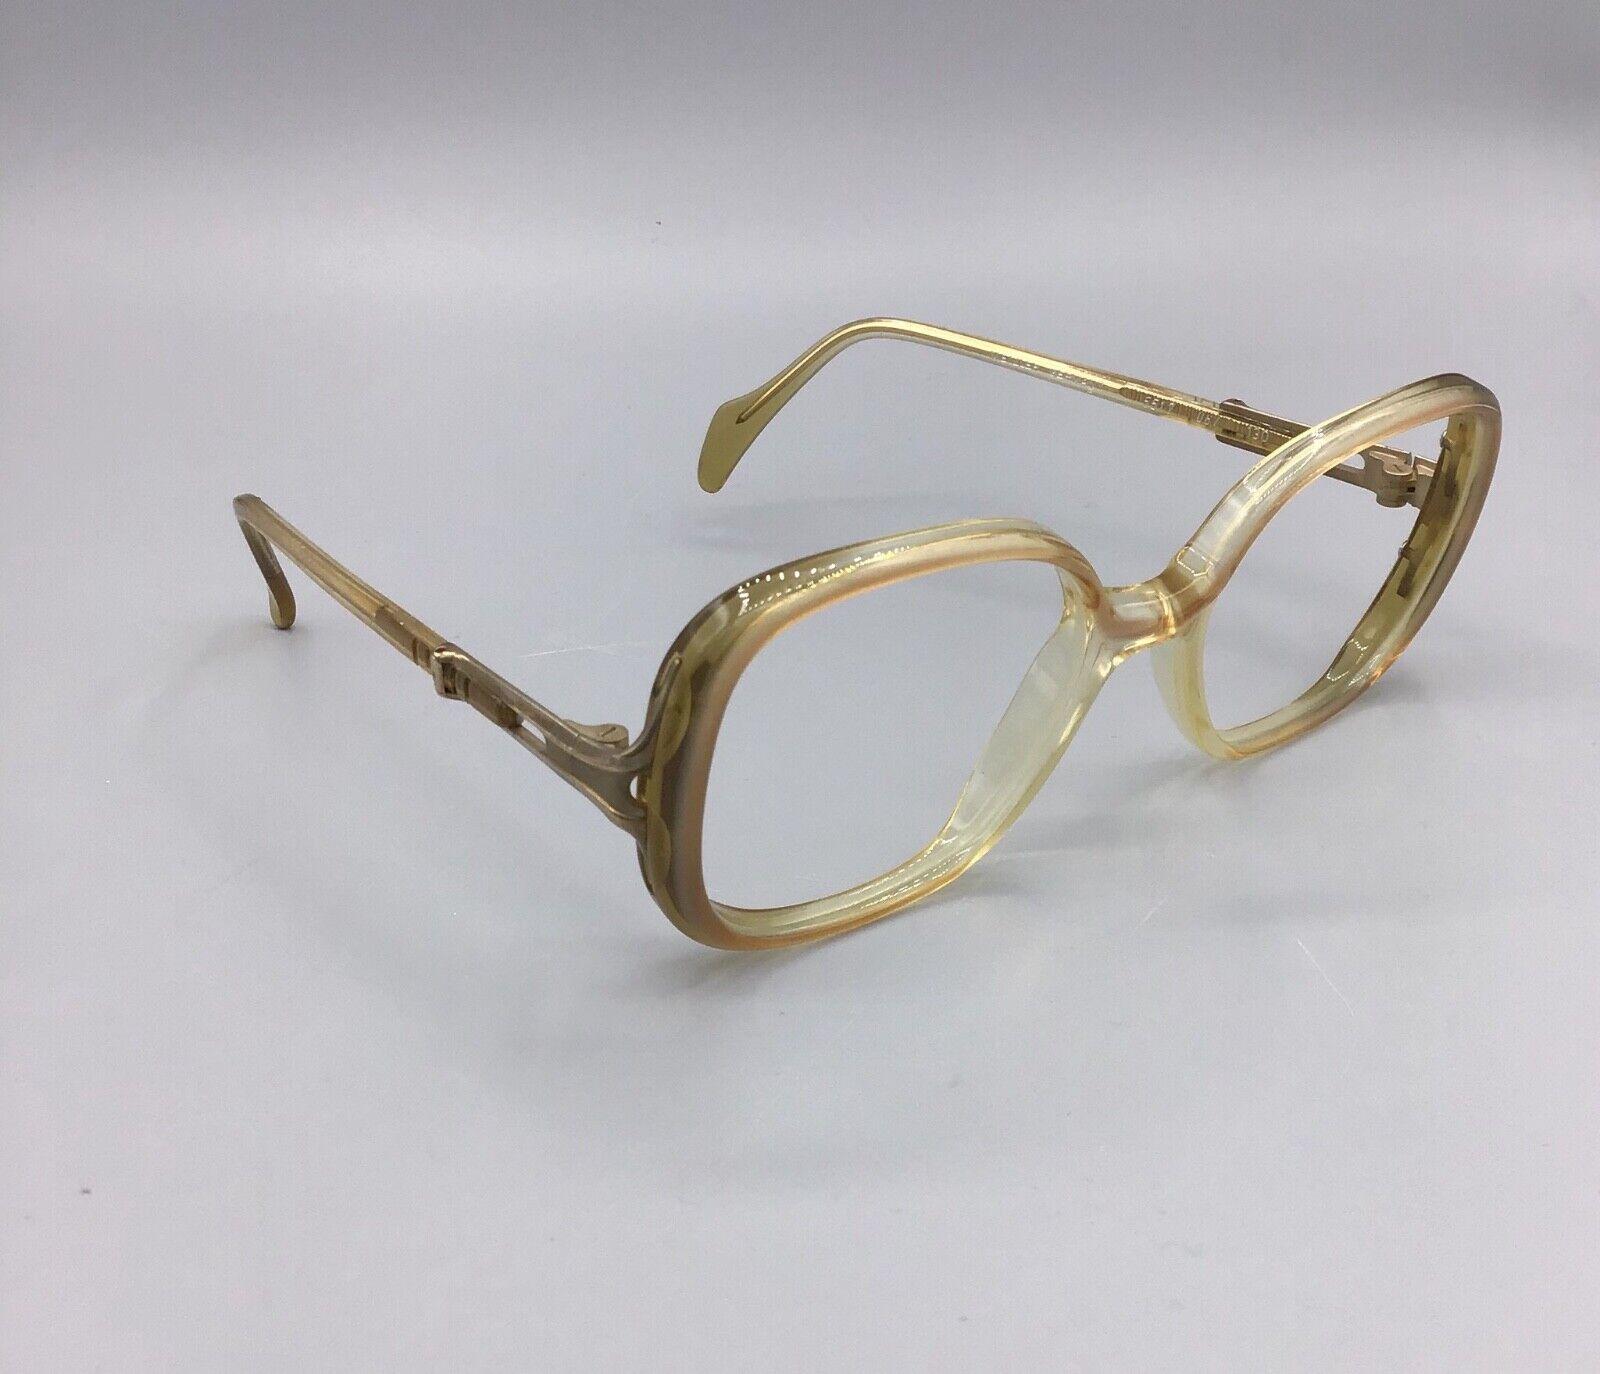 Metzler Germany occhiale vintage Eyewear frame brillen lunettes 5517 067 model